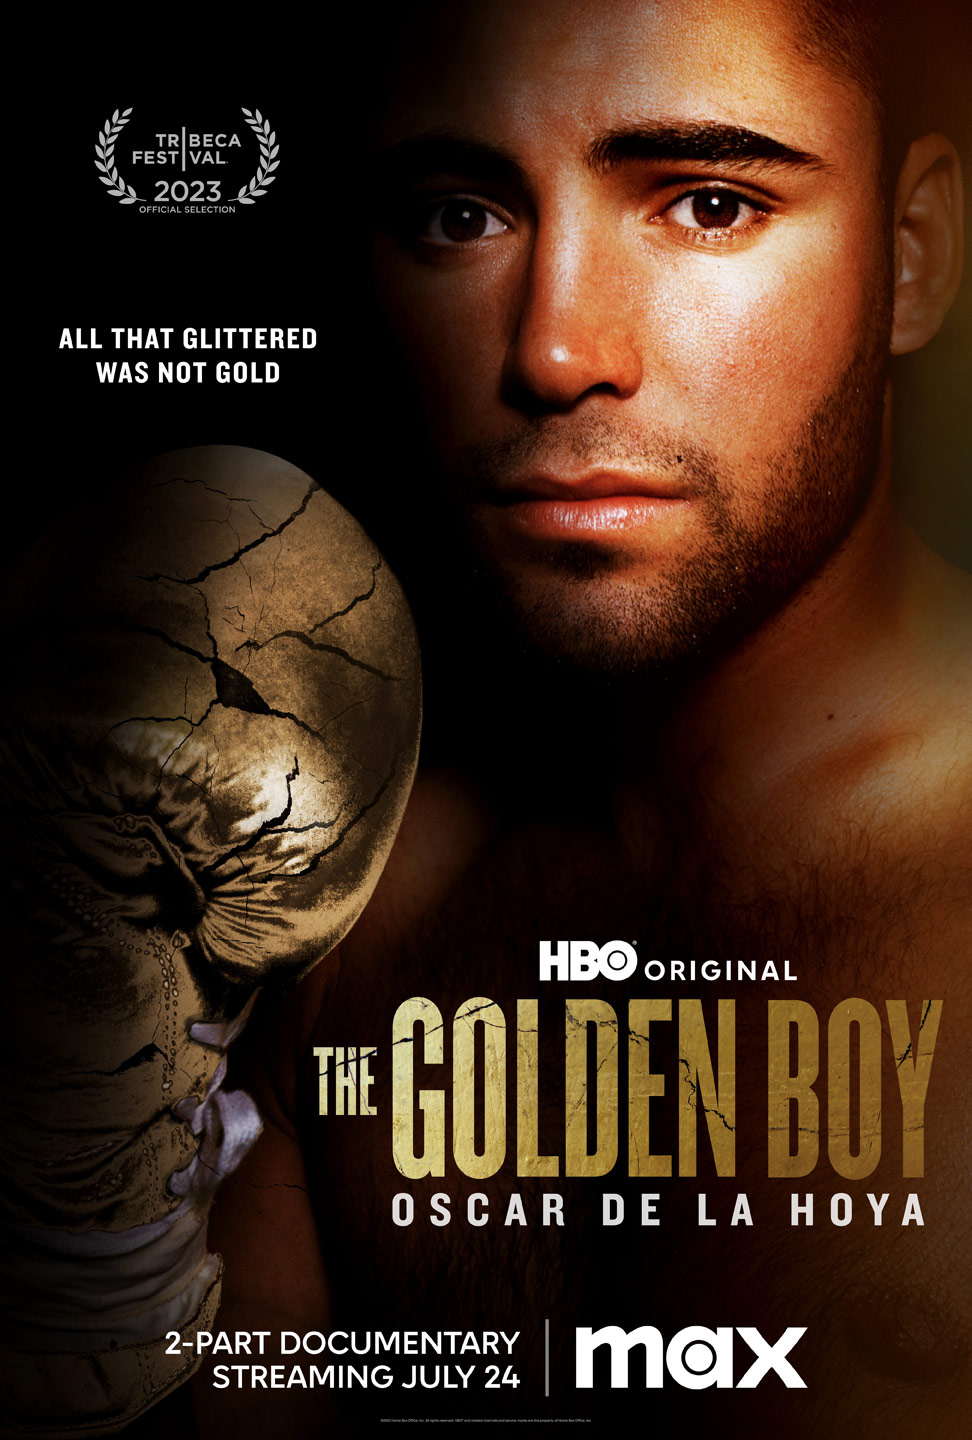 Oscar De La Hoya in "The Golden Boy"